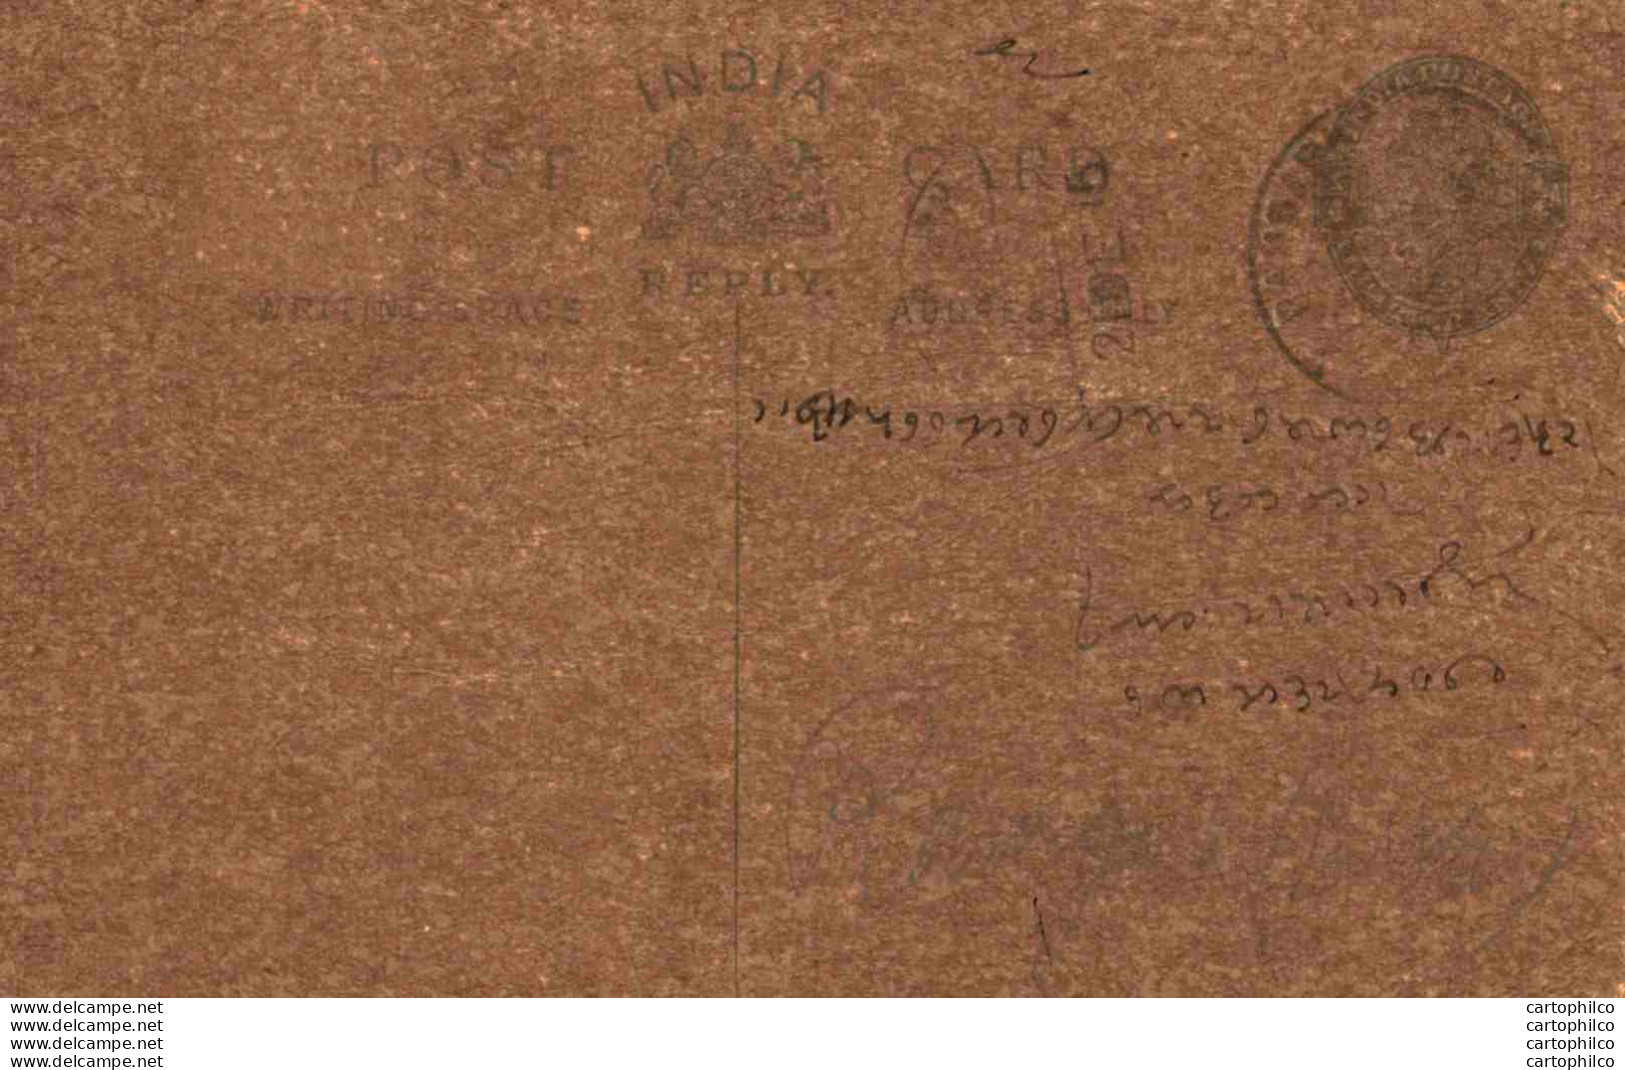 India Postal Stationery George V 1/4A - Cartoline Postali